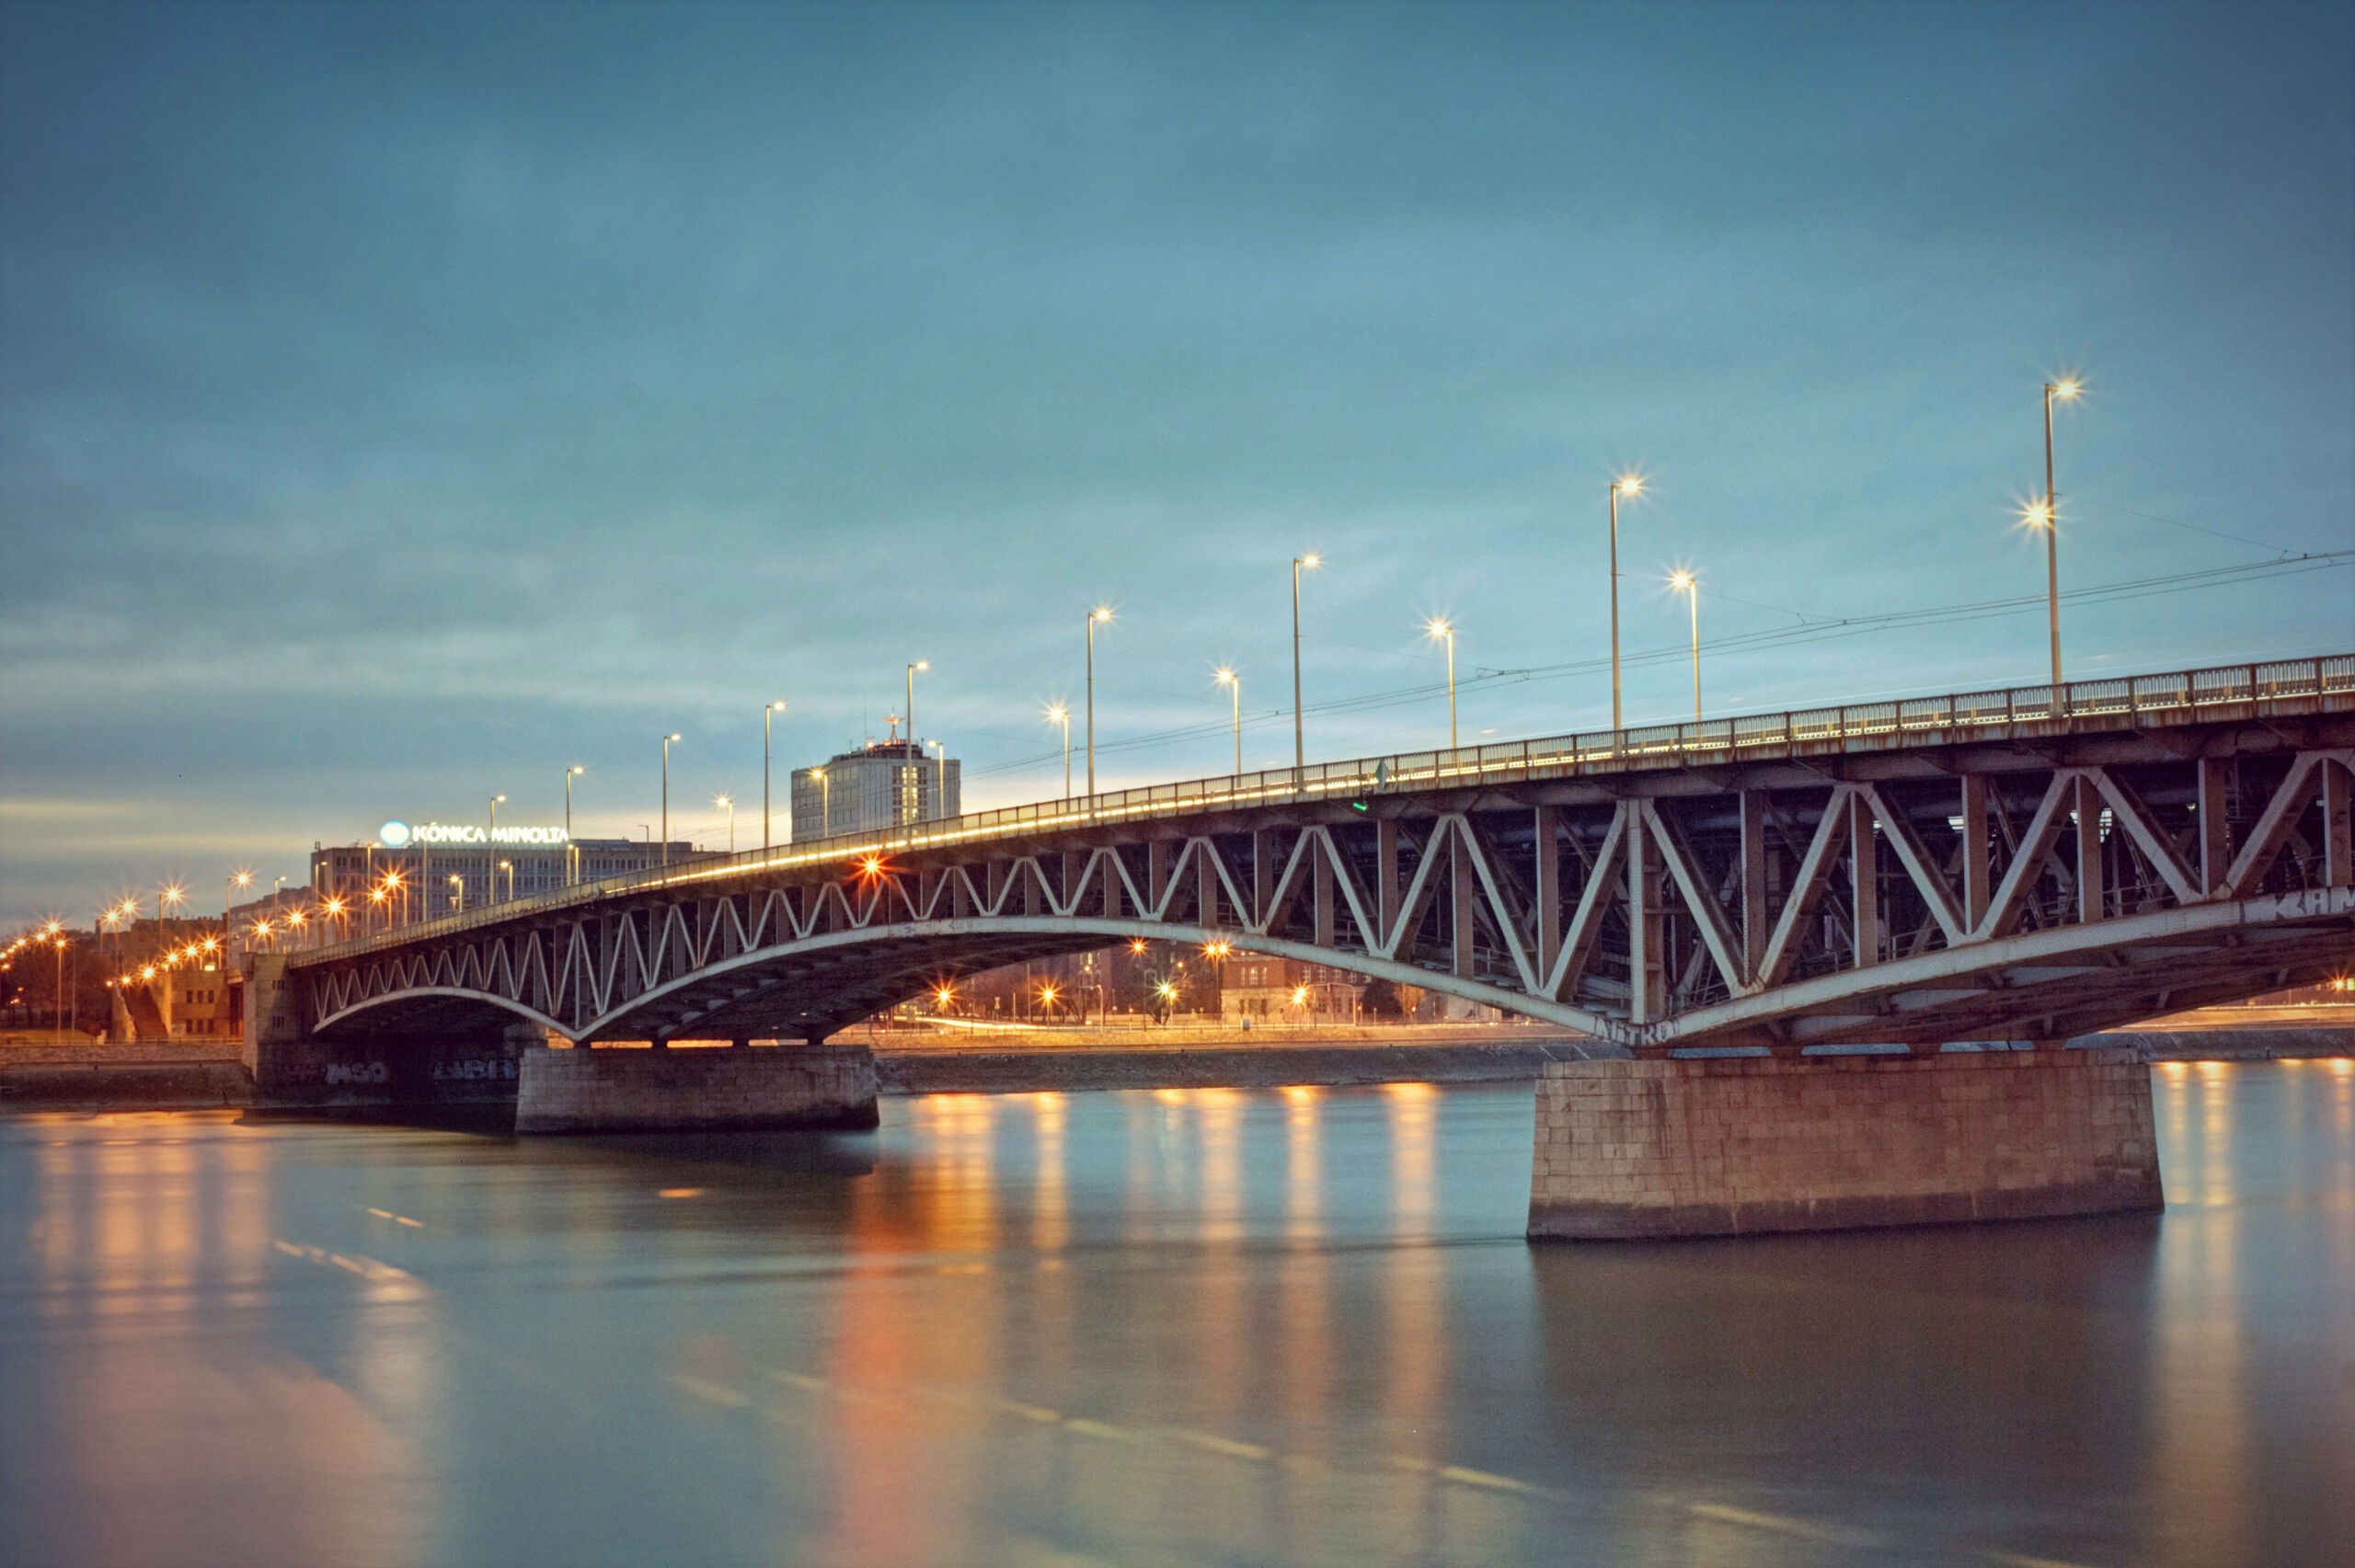 Petőfi Bridge (Petőfi-híd) in Budapest by sunset